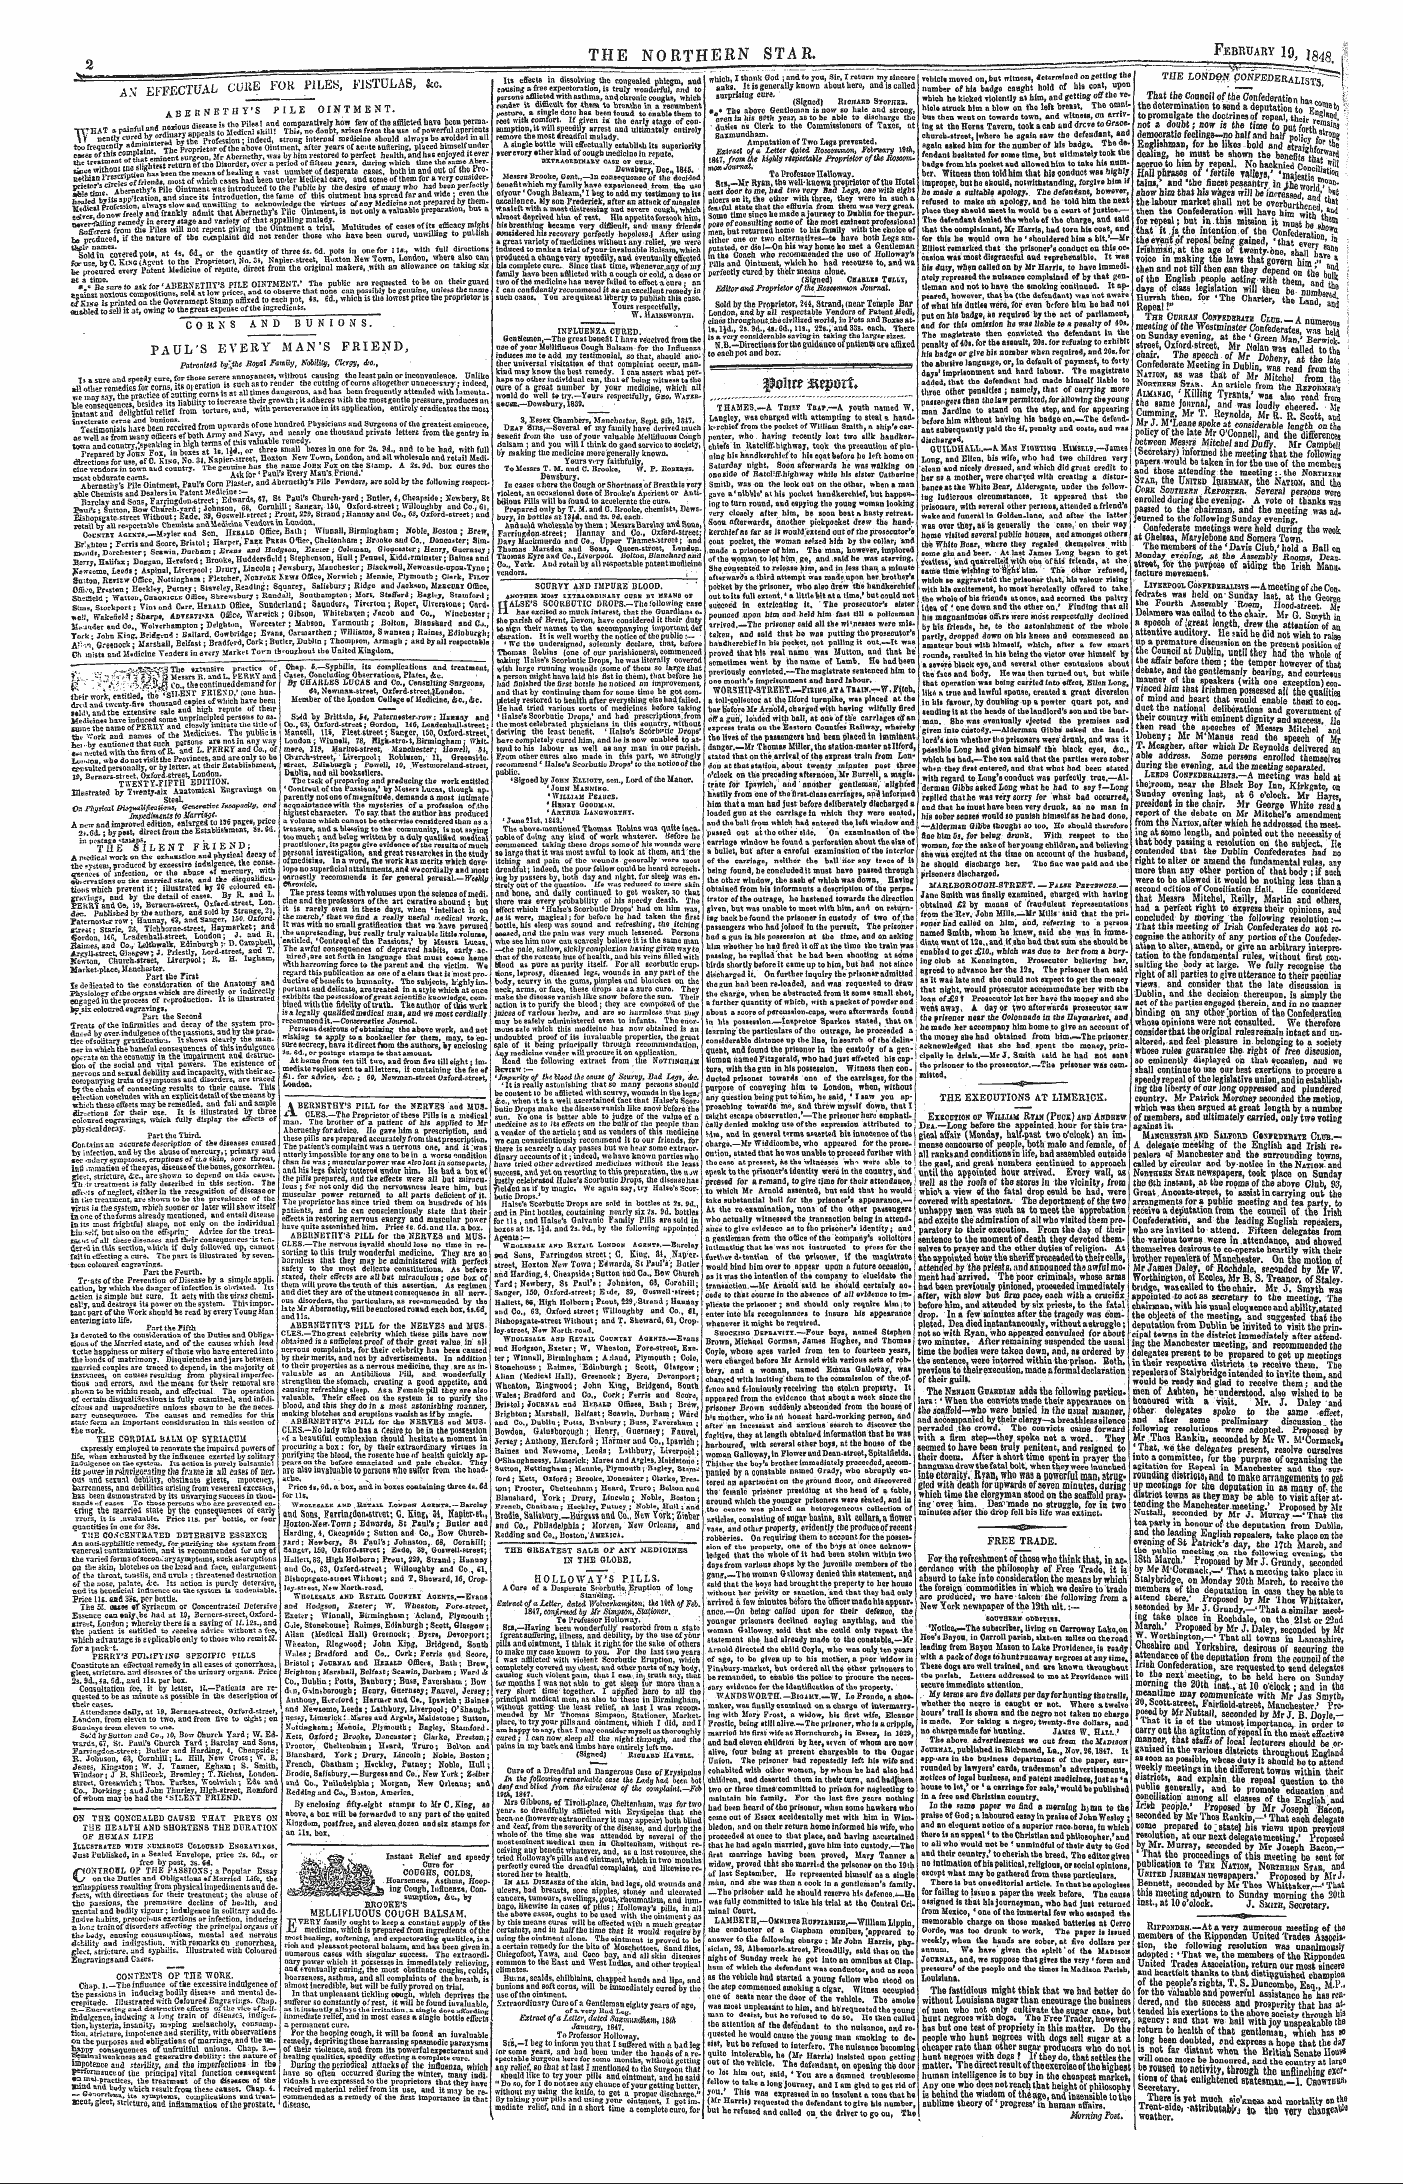 Northern Star (1837-1852): jS F Y, 3rd edition - Thames .—A Tnir.F Tba?,— A Youth Named W...